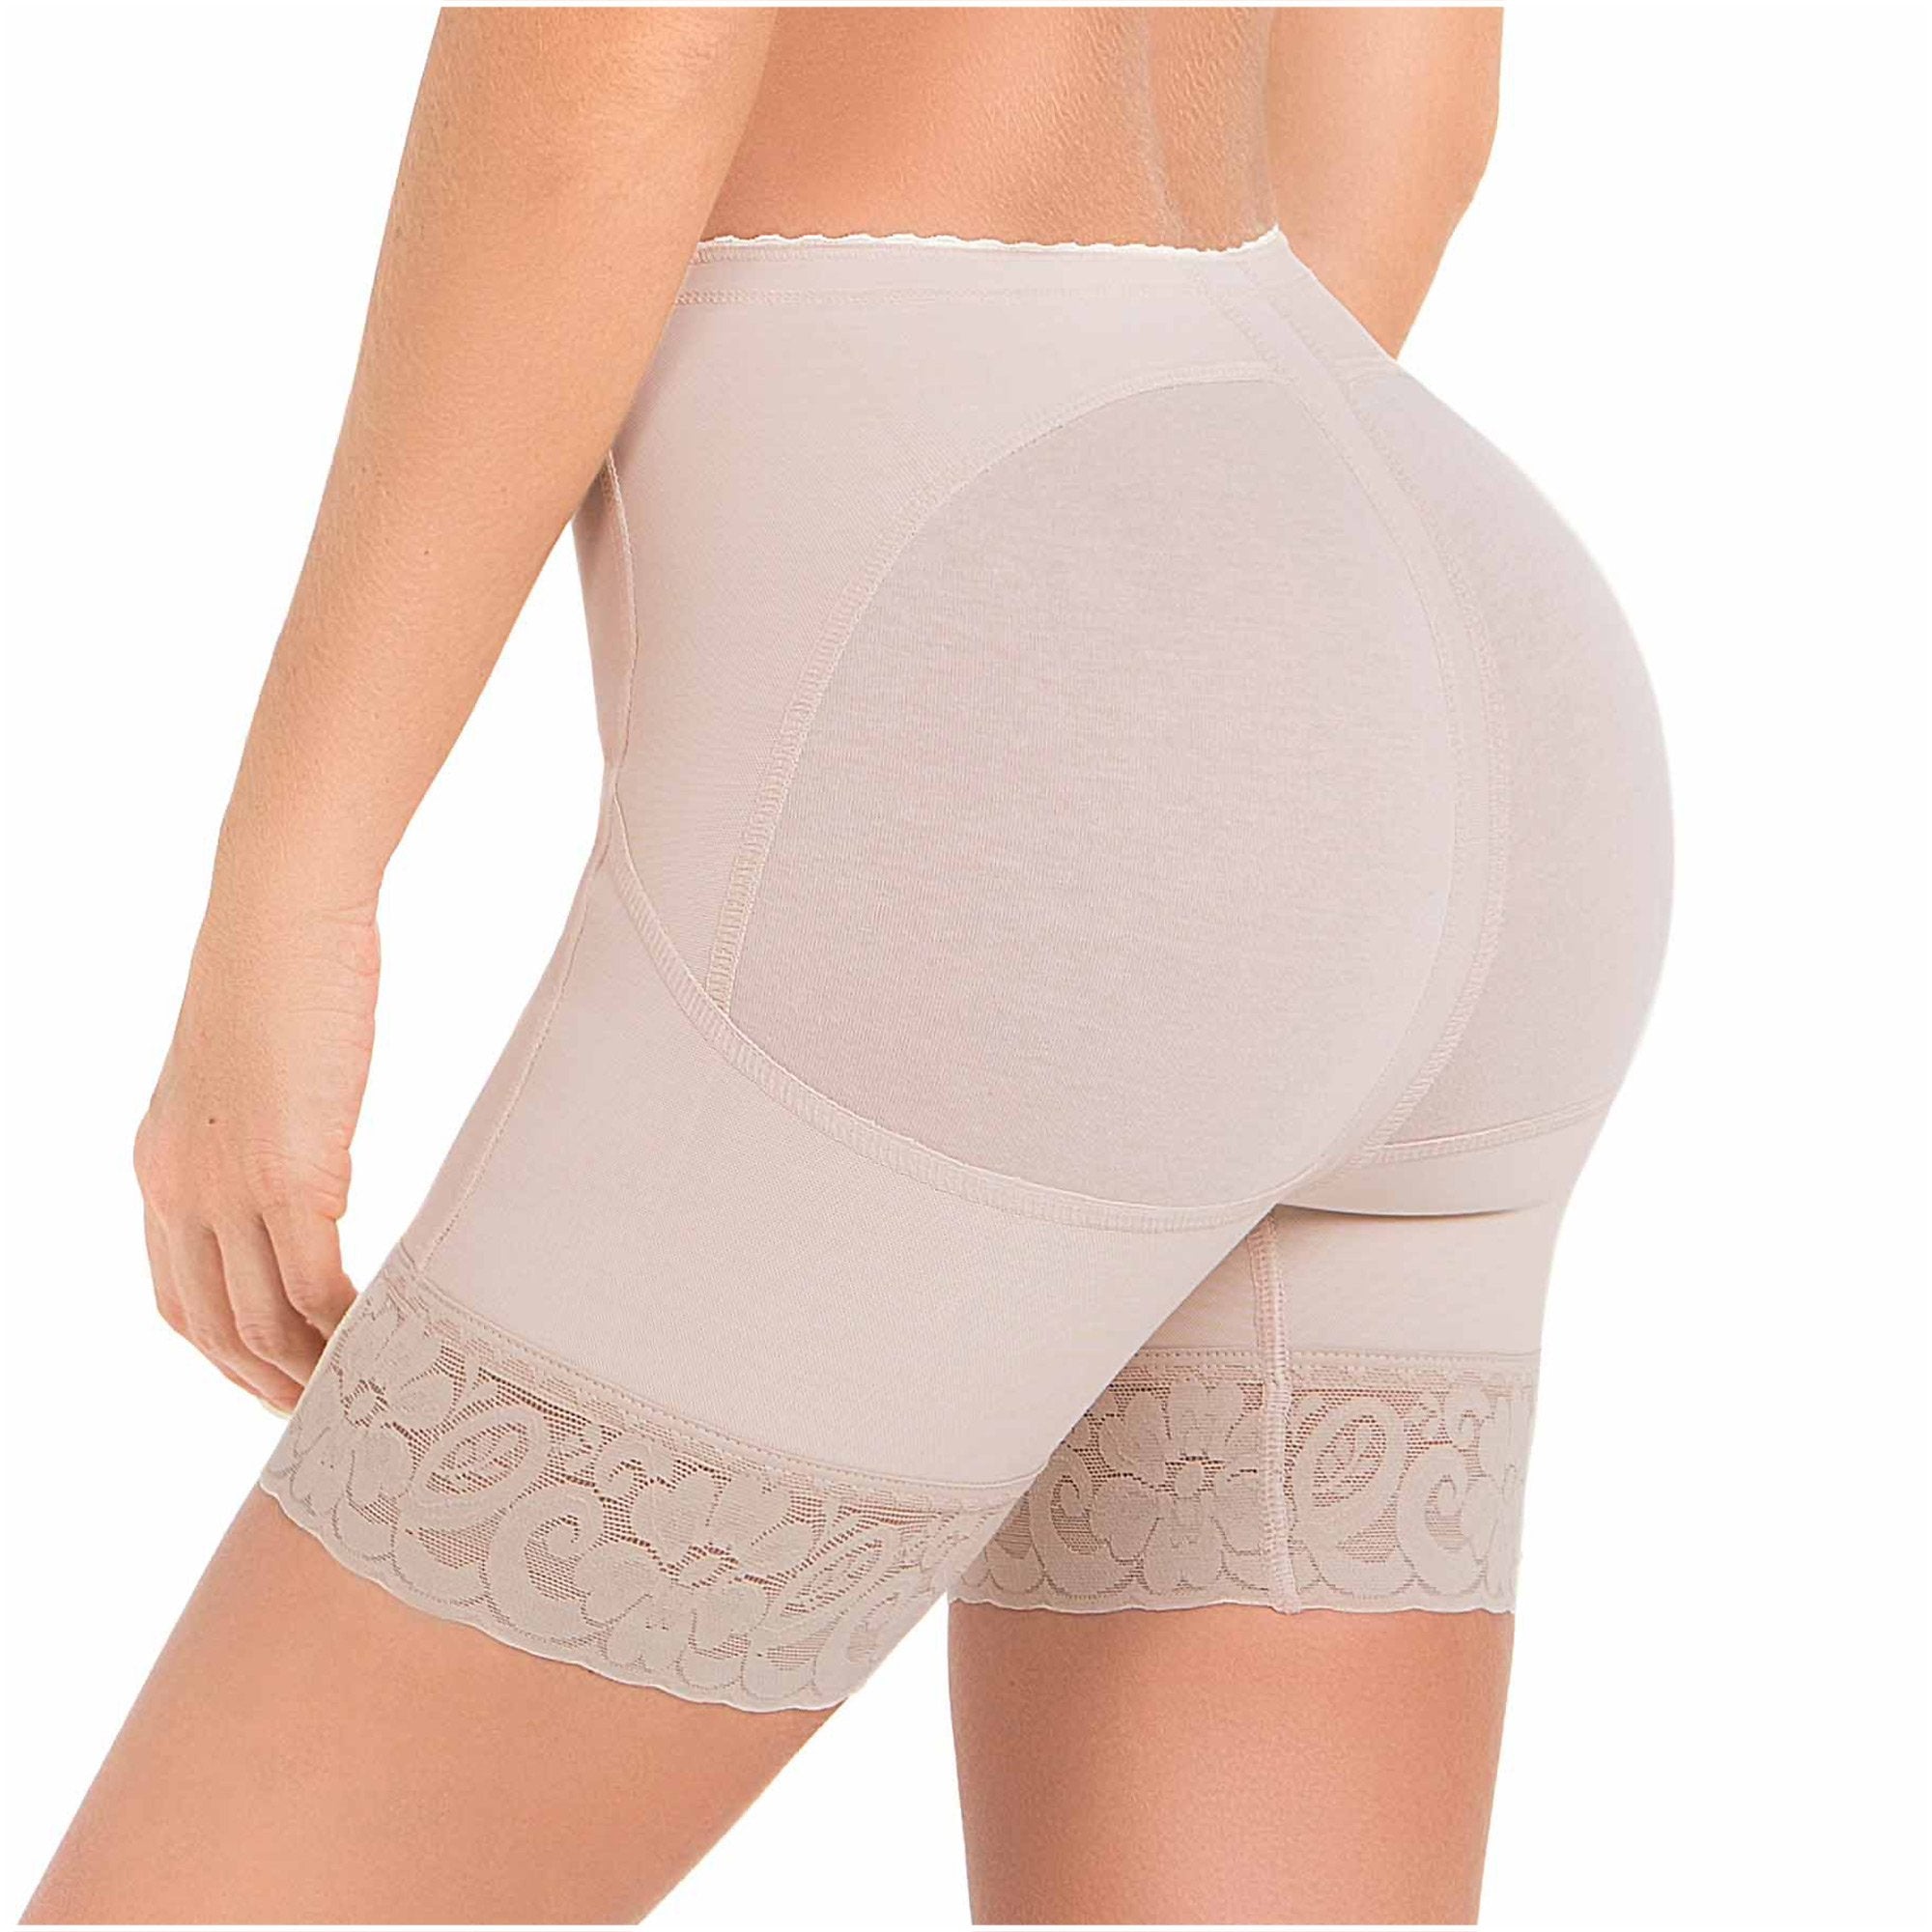 Colombian Panty Short Lifts Butt